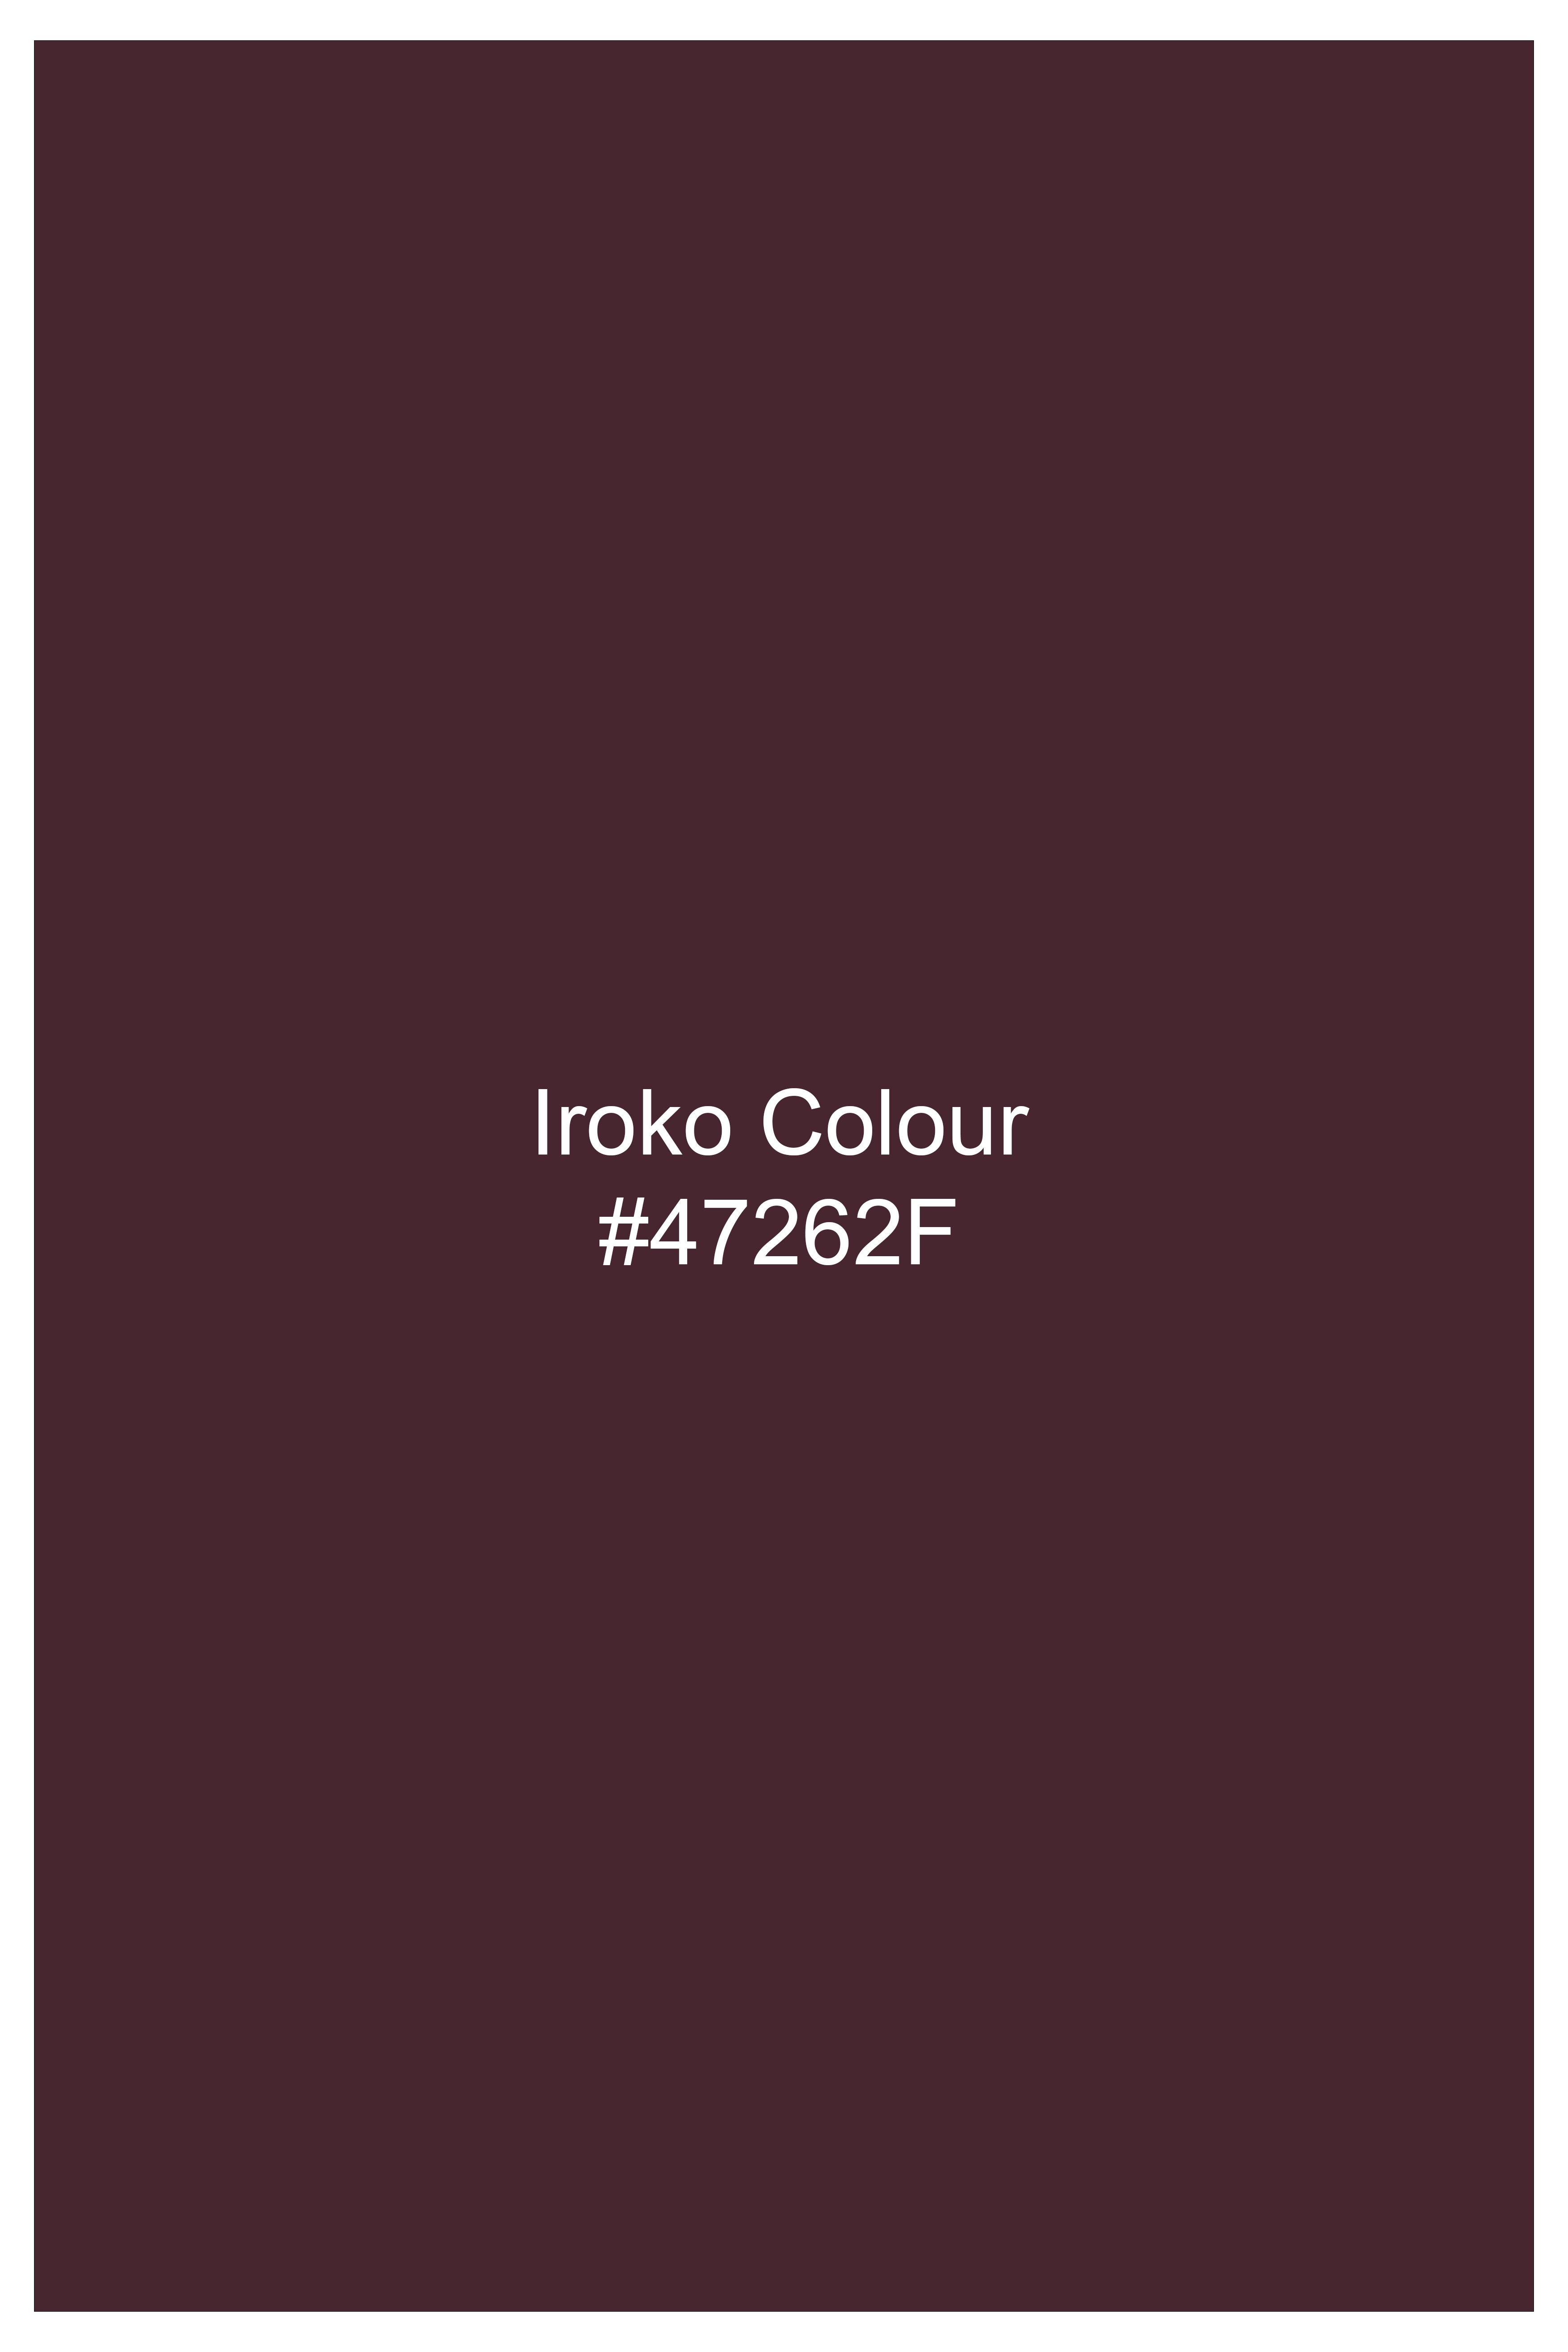 Iroko maroon Windowpane Wool Rich Bandhgala Blazer